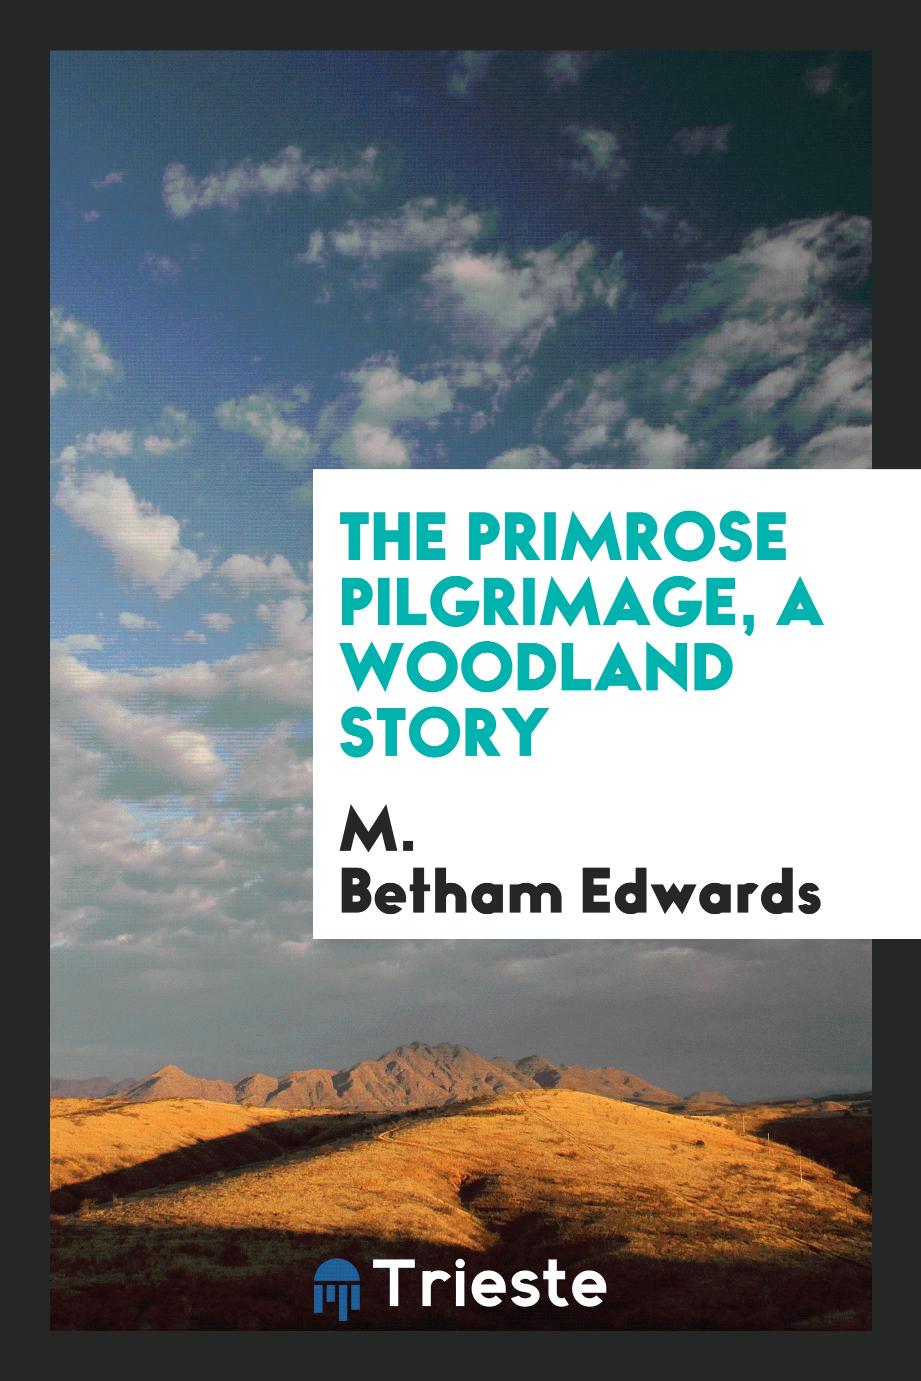 The Primrose Pilgrimage, a Woodland Story